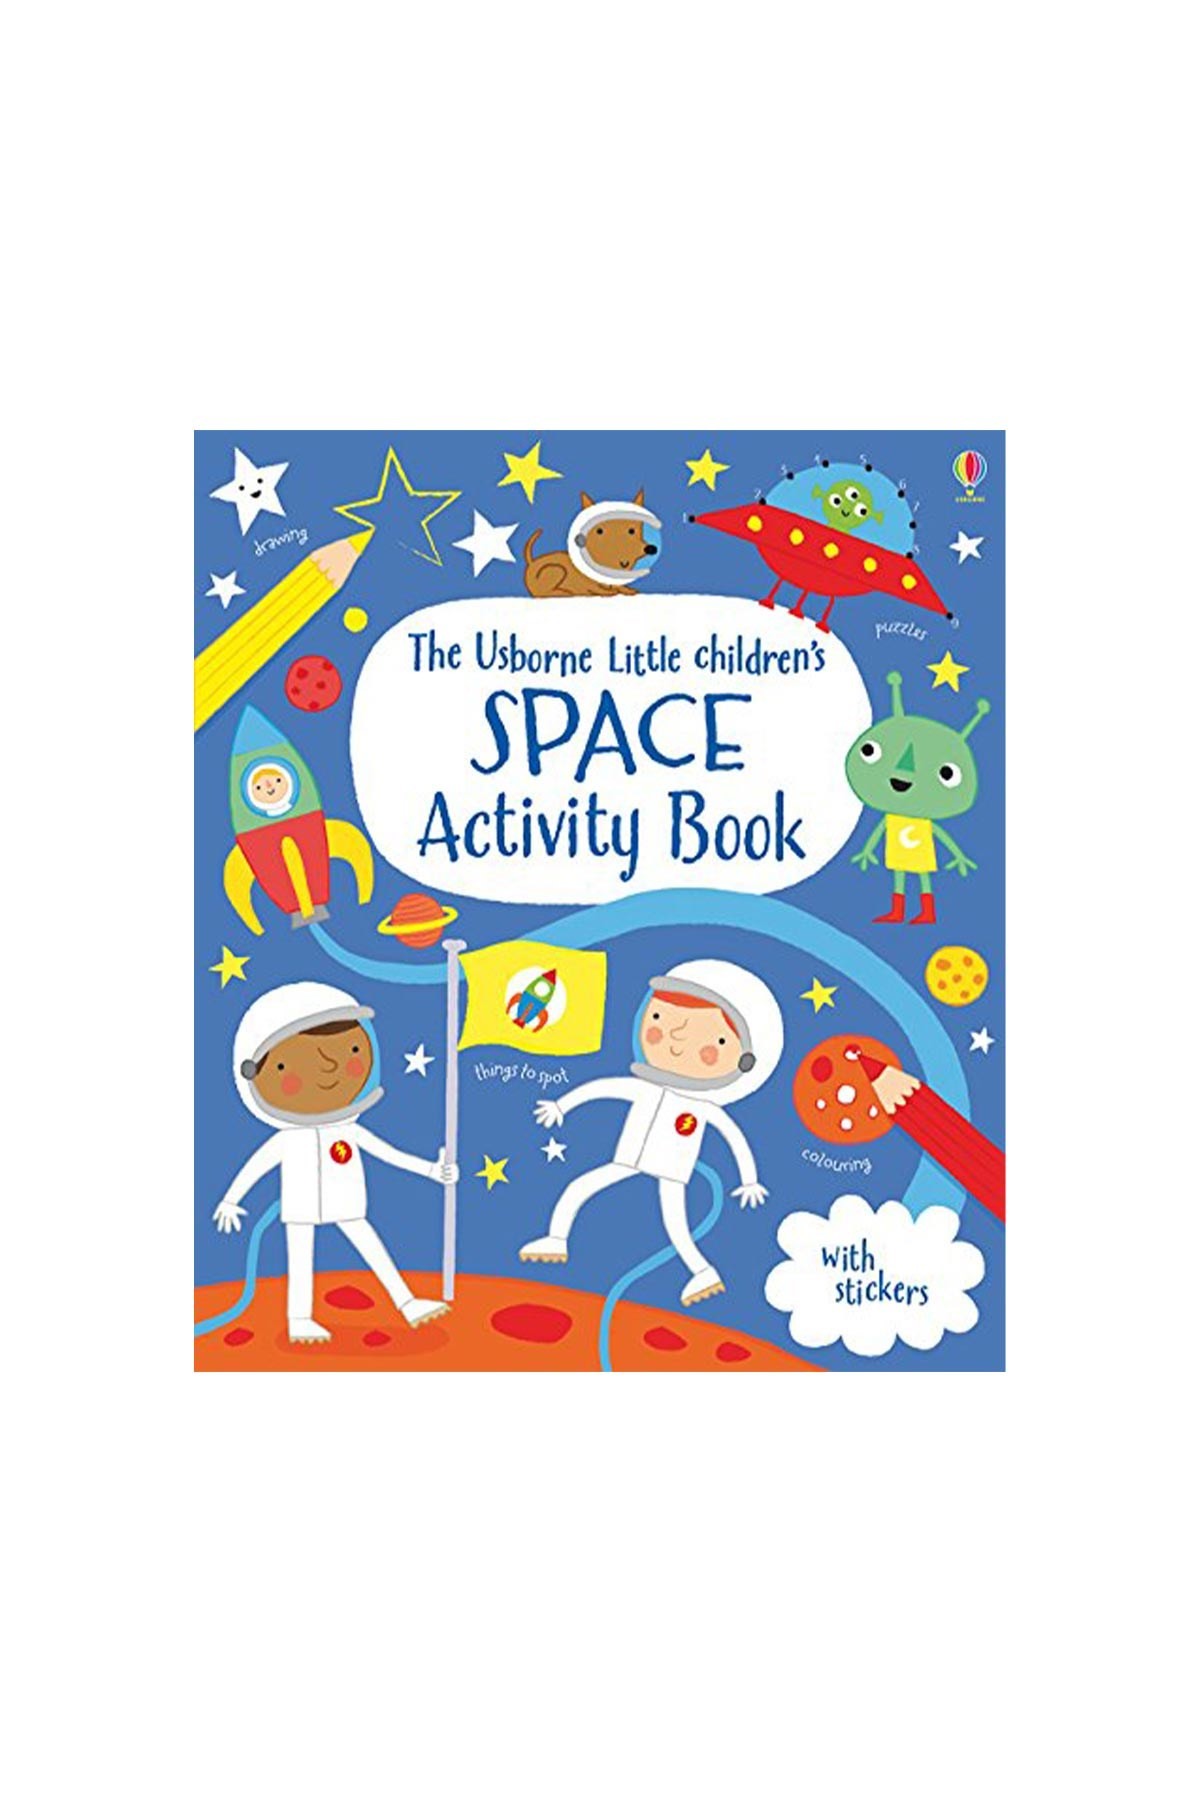 The Usborne Little Childrens Space Activity